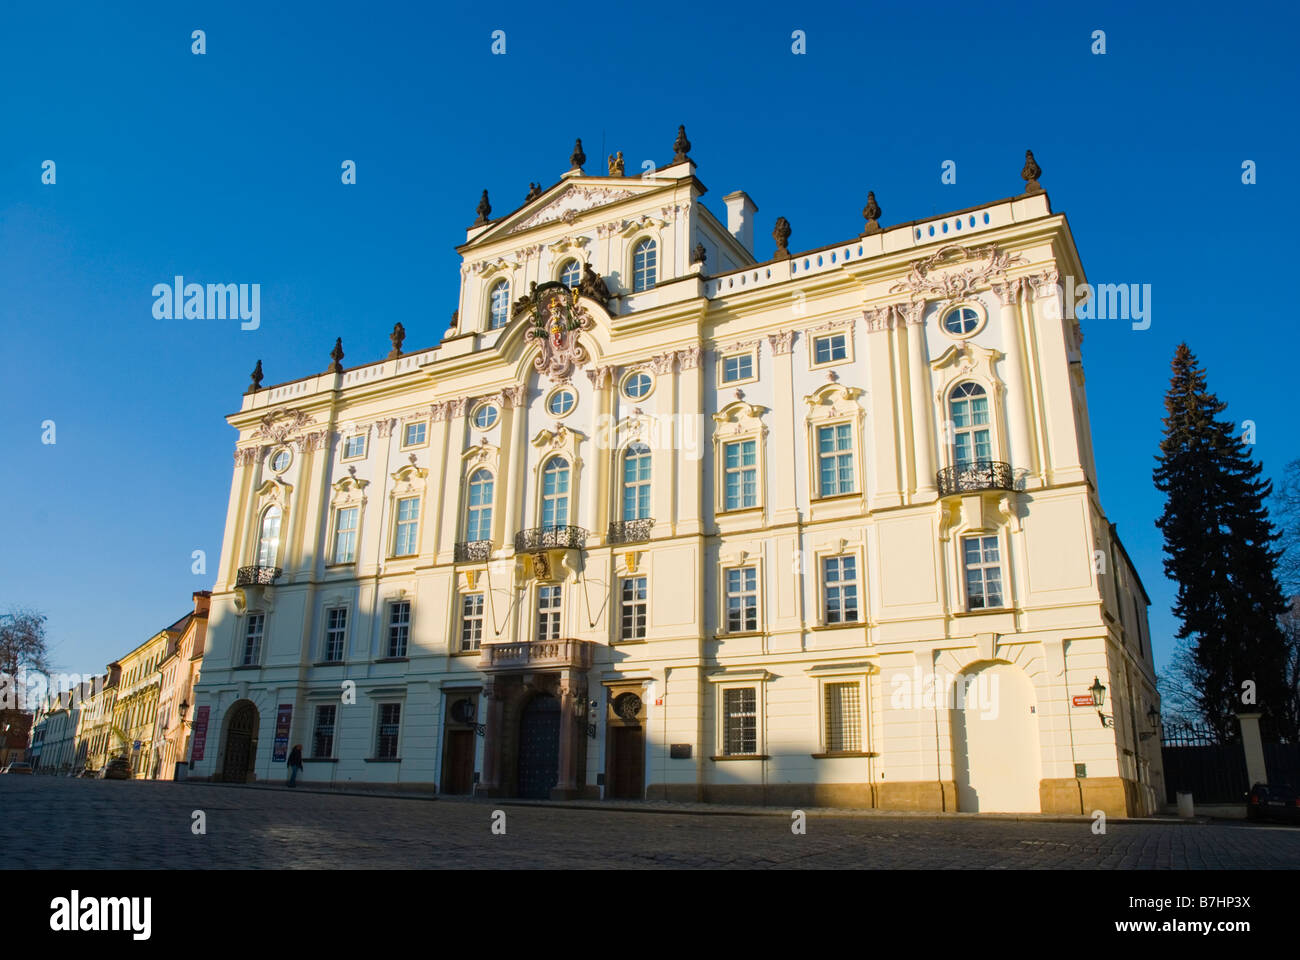 Arcibiskupsky palac a Hradcanske namesti square in Hradcany quartiere di Praga Repubblica Ceca Europa Foto Stock